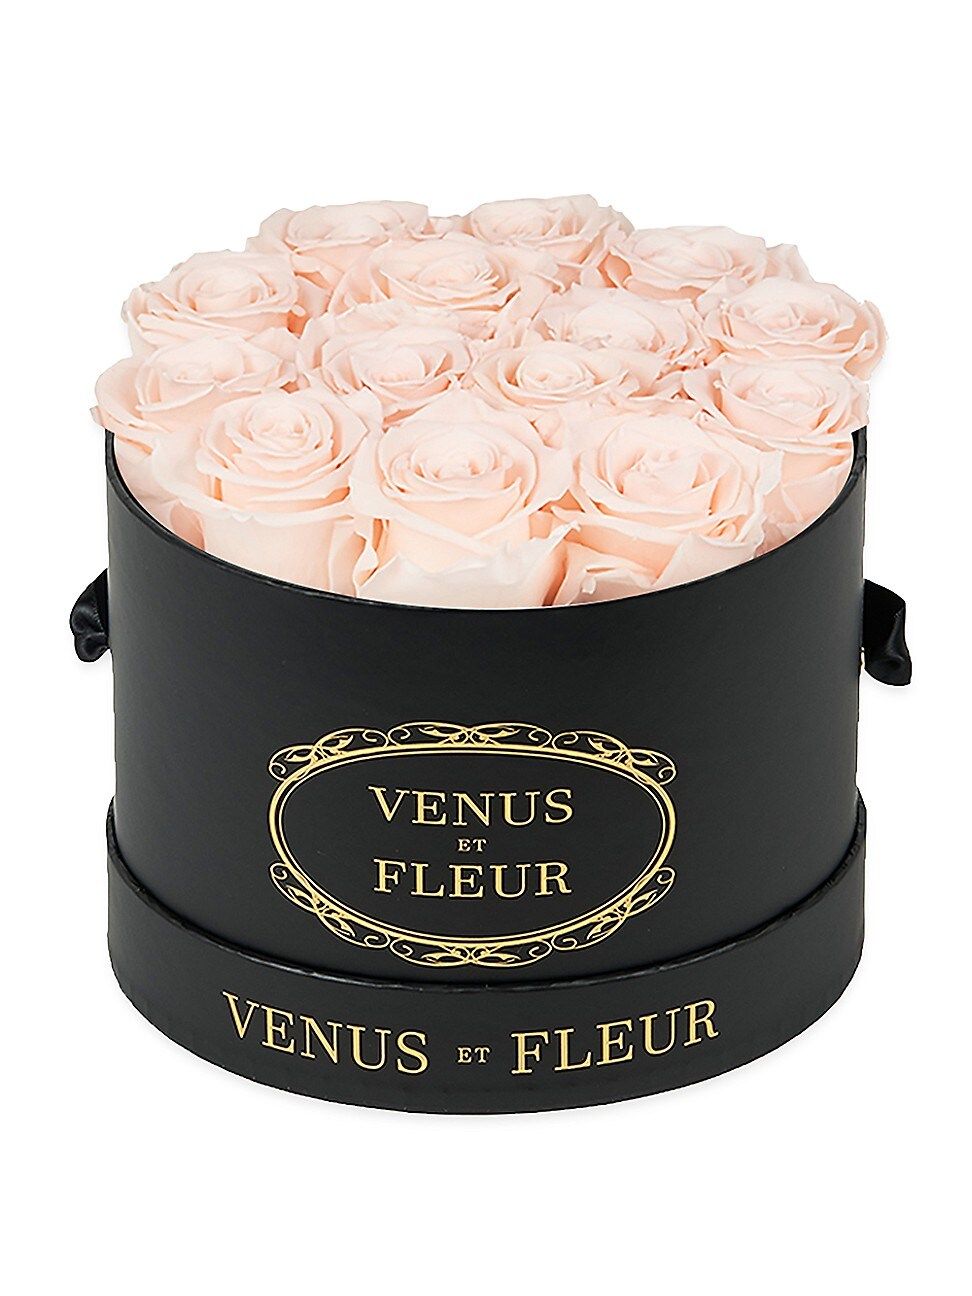 Venus ET Fleur Classic Small Round Box with Pure White Roses - Black | Saks Fifth Avenue